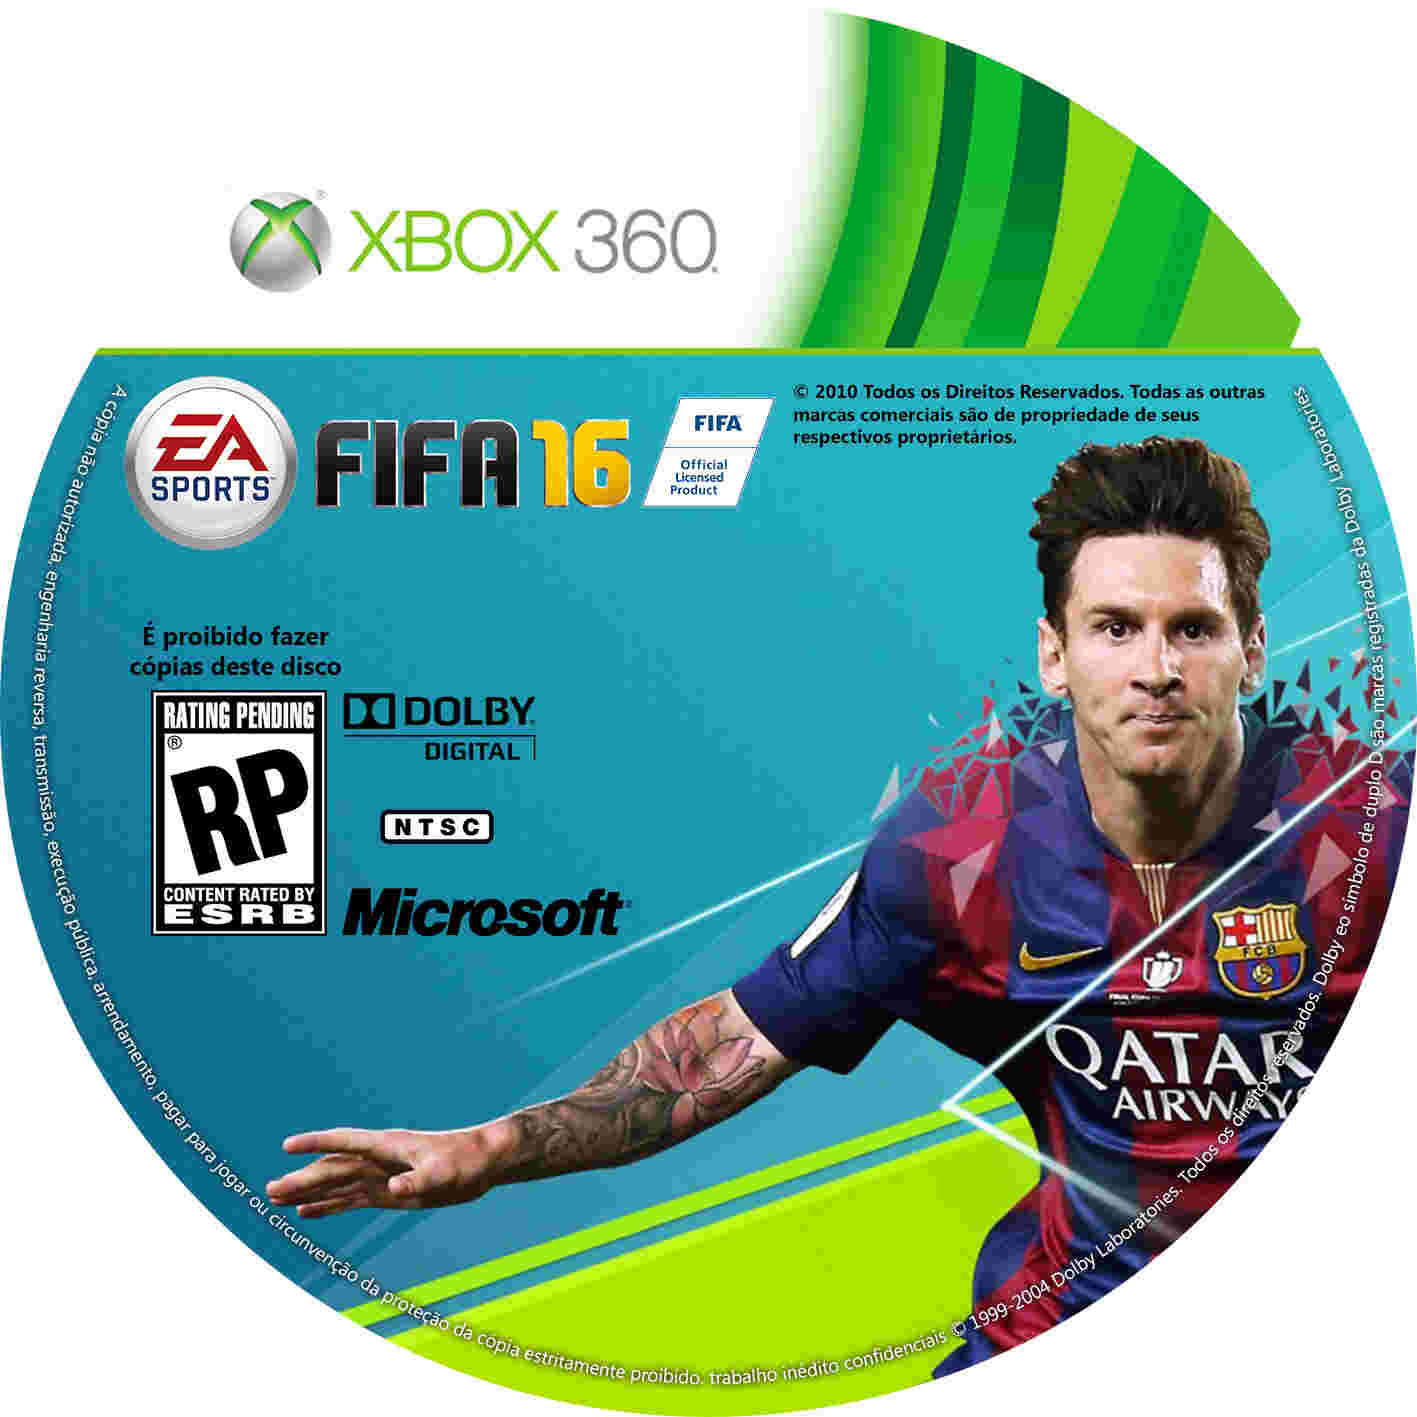 360 fifa. Игры на Xbox 360 FIFA. Диски на иксбокс 360 ФИФА. Диски для Xbox 360 FIFA 22. ФИФА 16 диск на иксбокс 360.